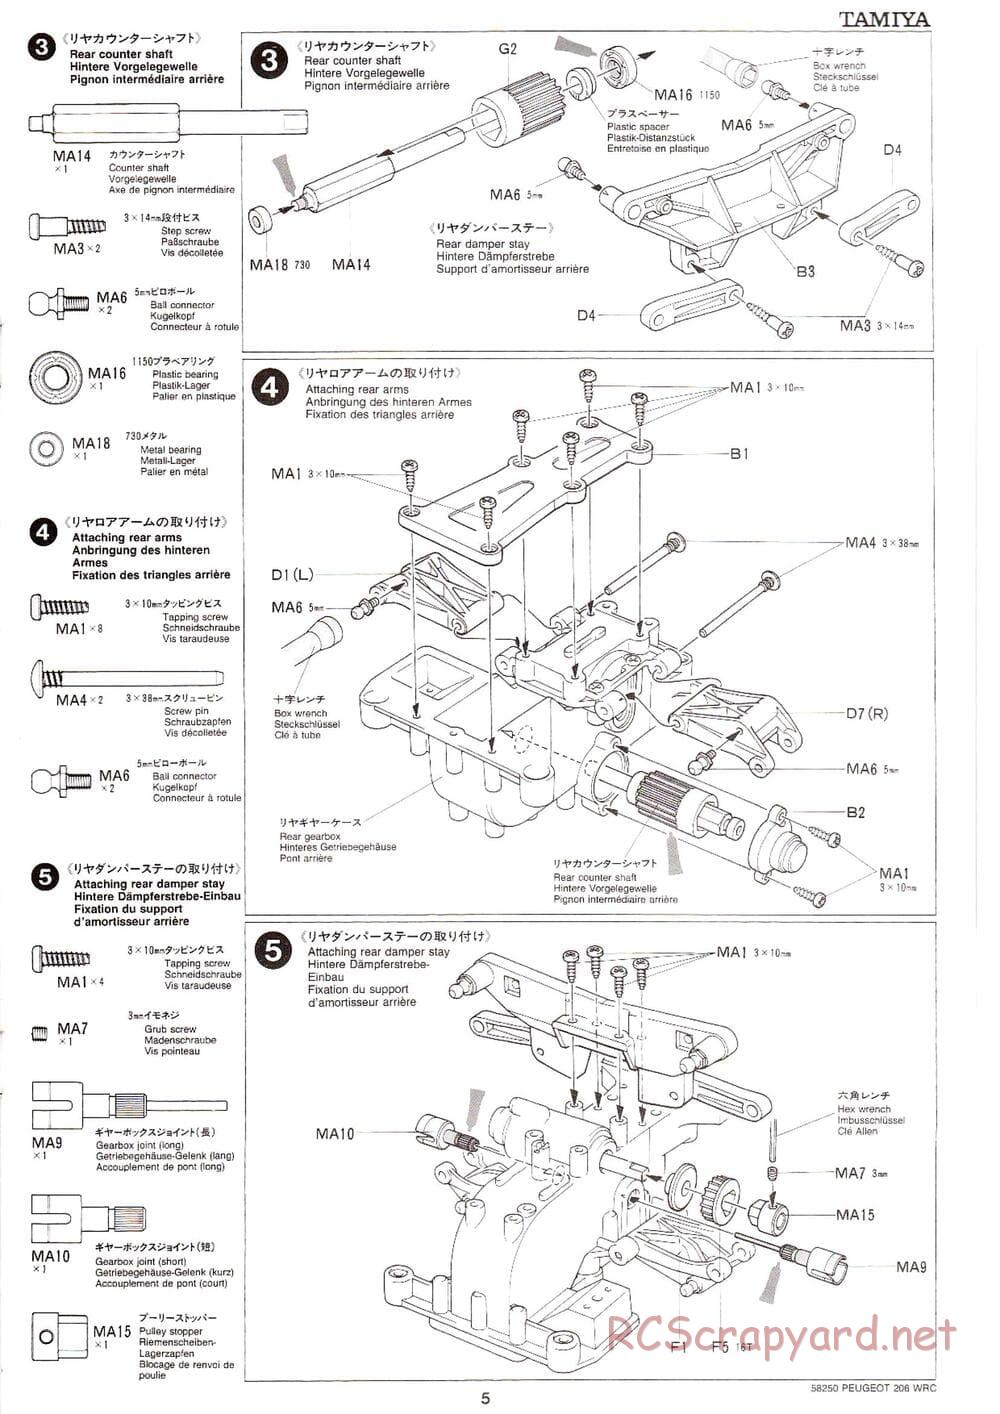 Tamiya - Peugeot 206 WRC - TA-03FS Chassis - Manual - Page 5